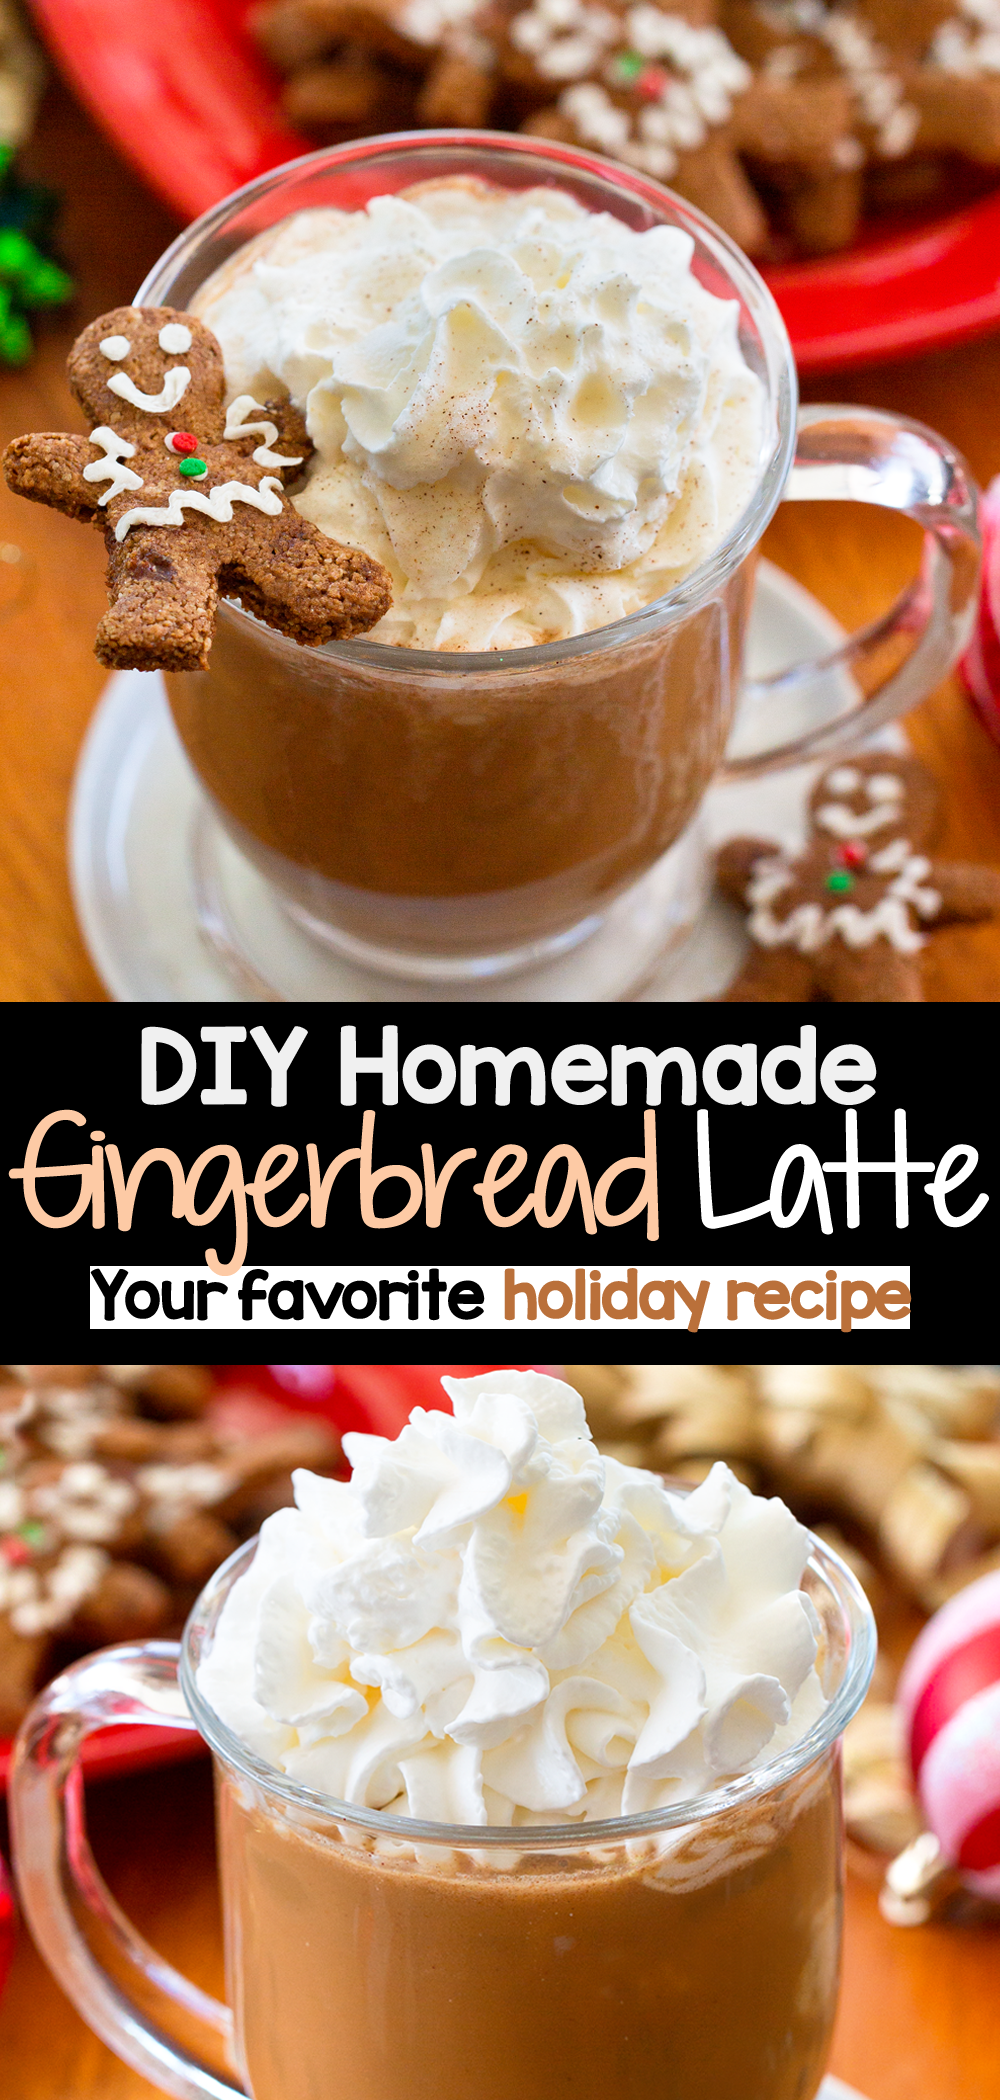 Copycat Starbucks Gingerbread Latte Recipe (BEST Homemade Version)